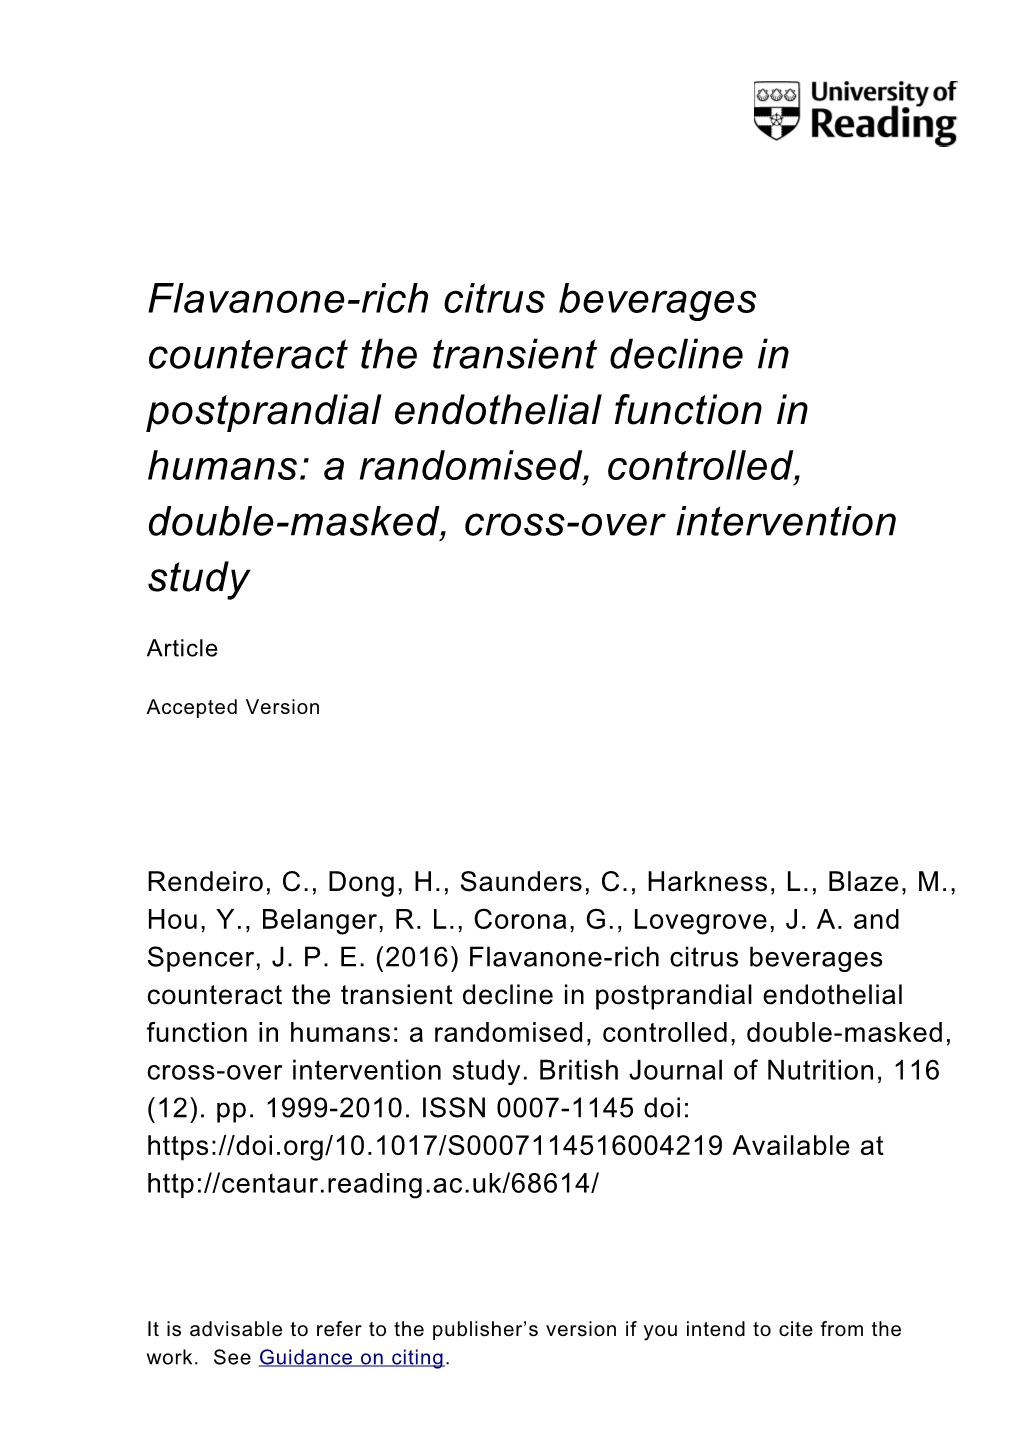 Flavanone-Rich Citrus Beverages Counteract the Transient